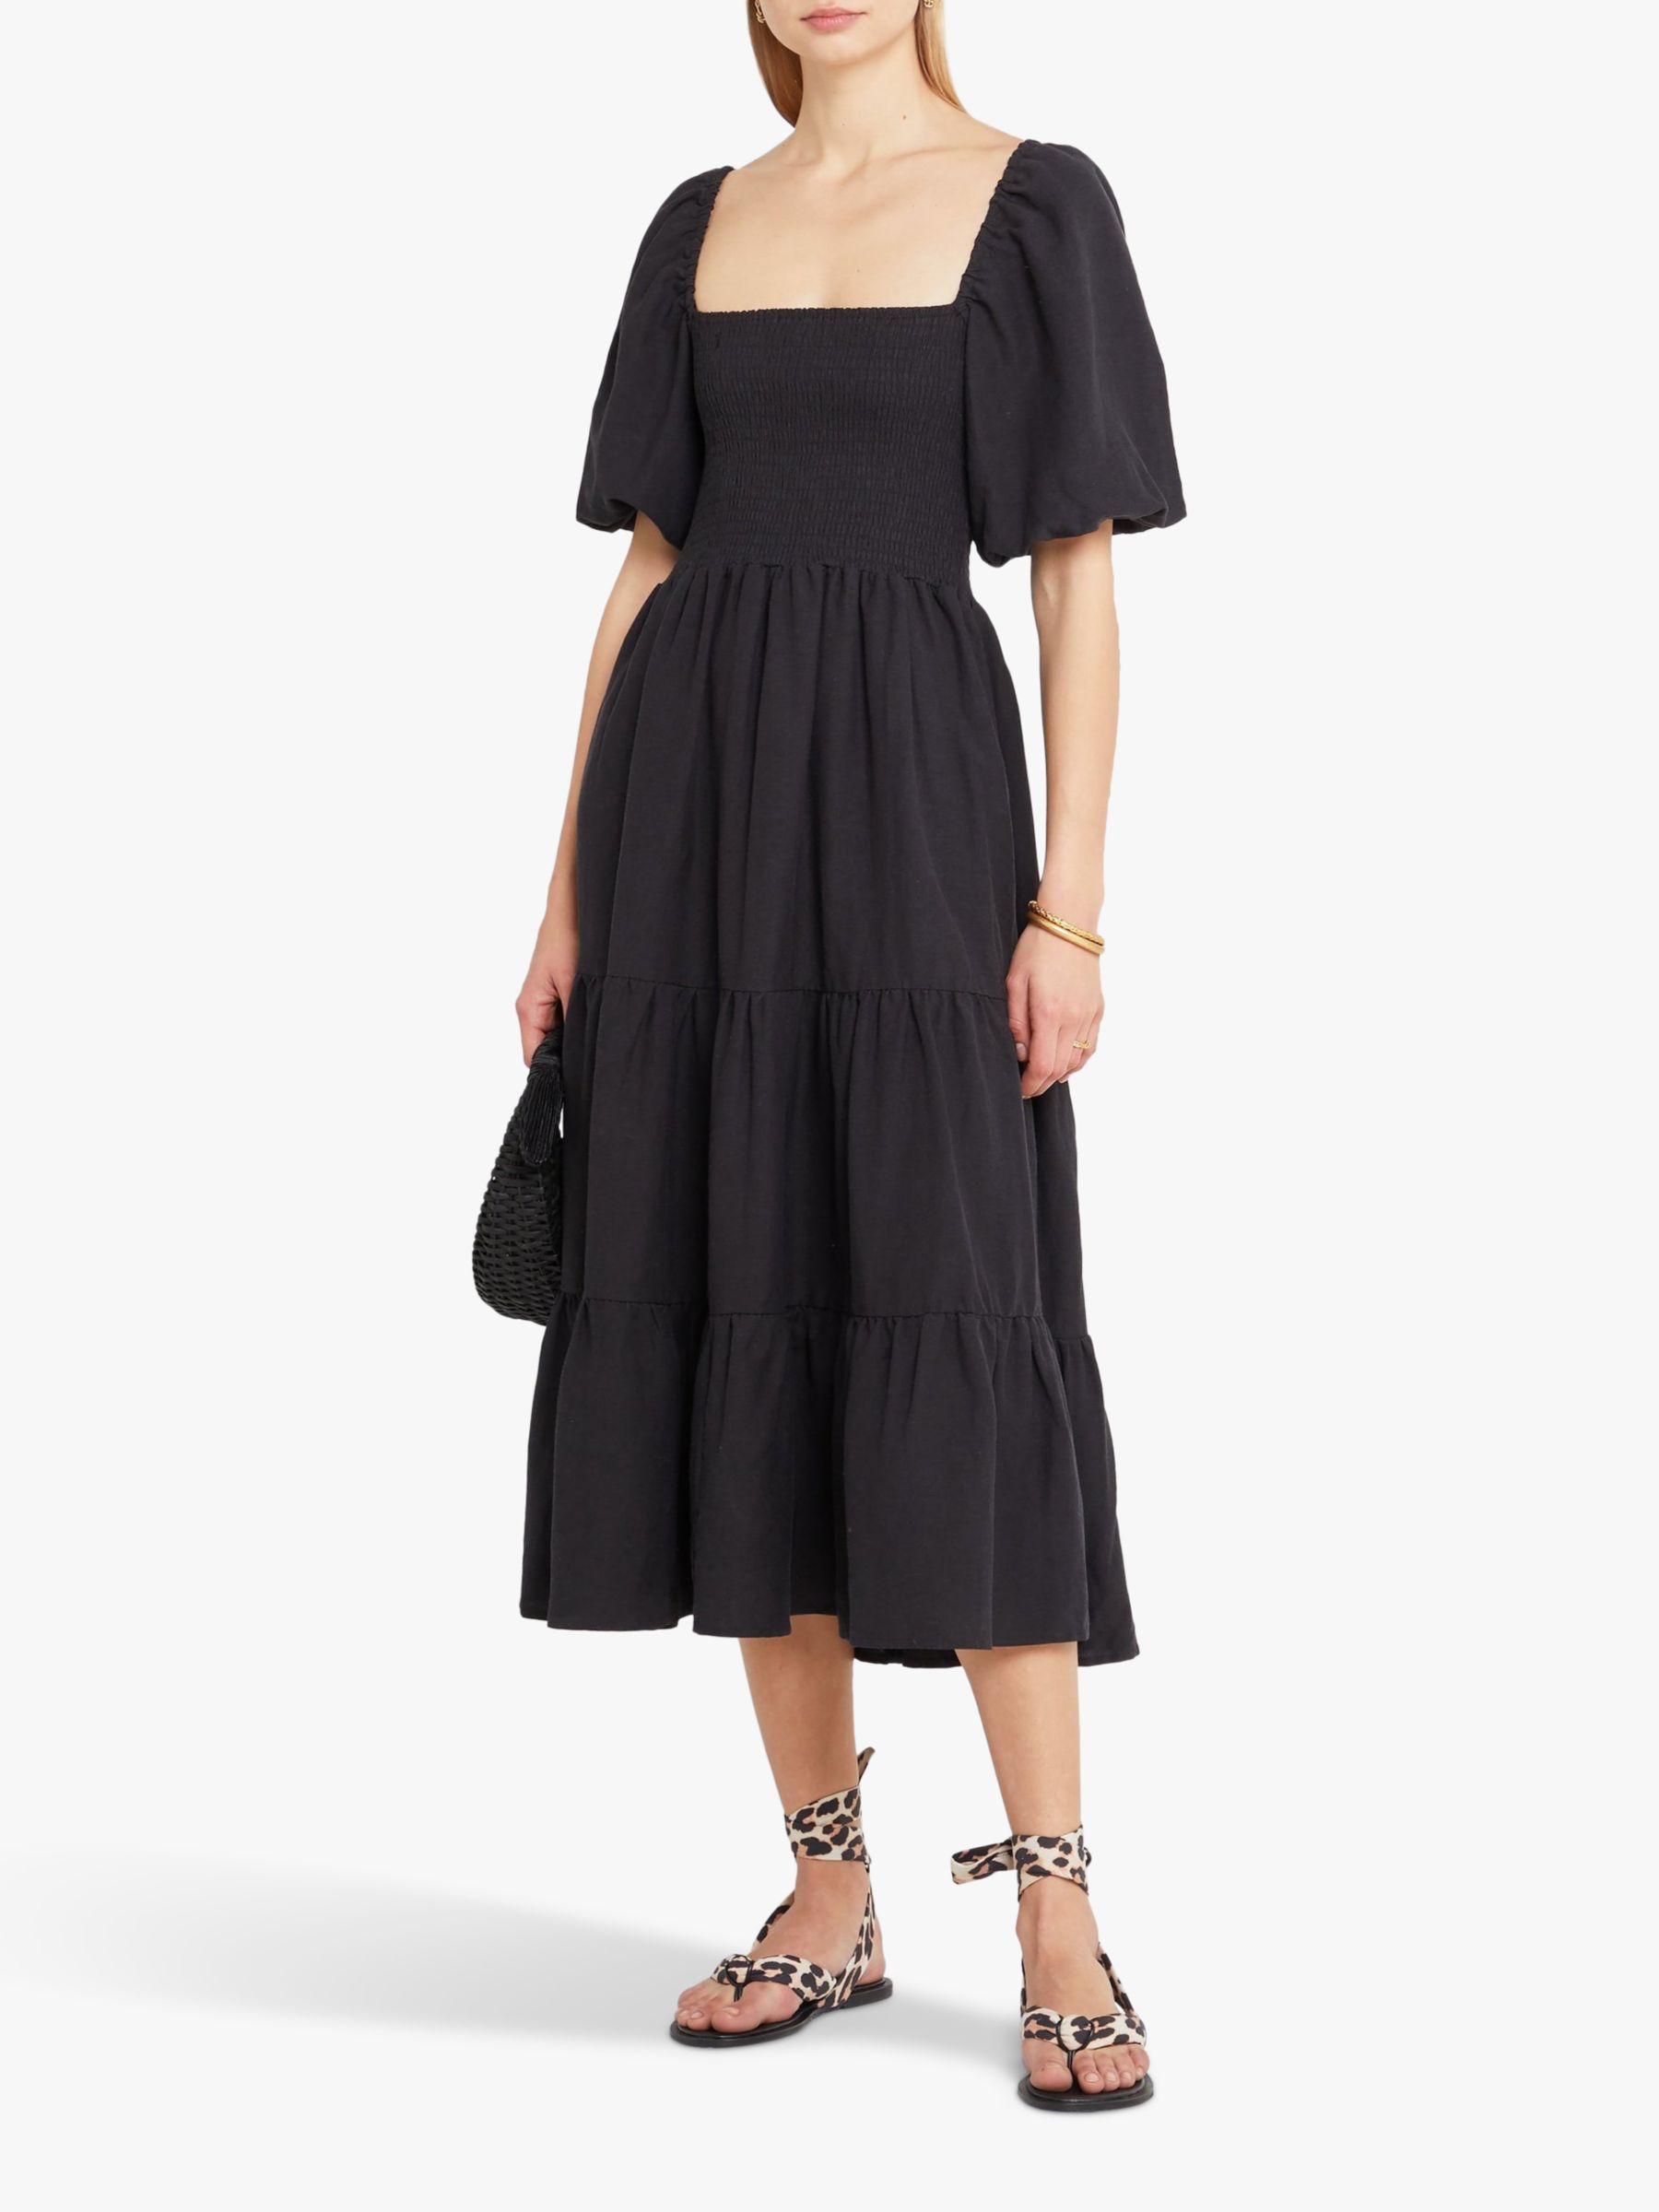 o.p.t Hera Linen Blend Dress, Black at John Lewis & Partners